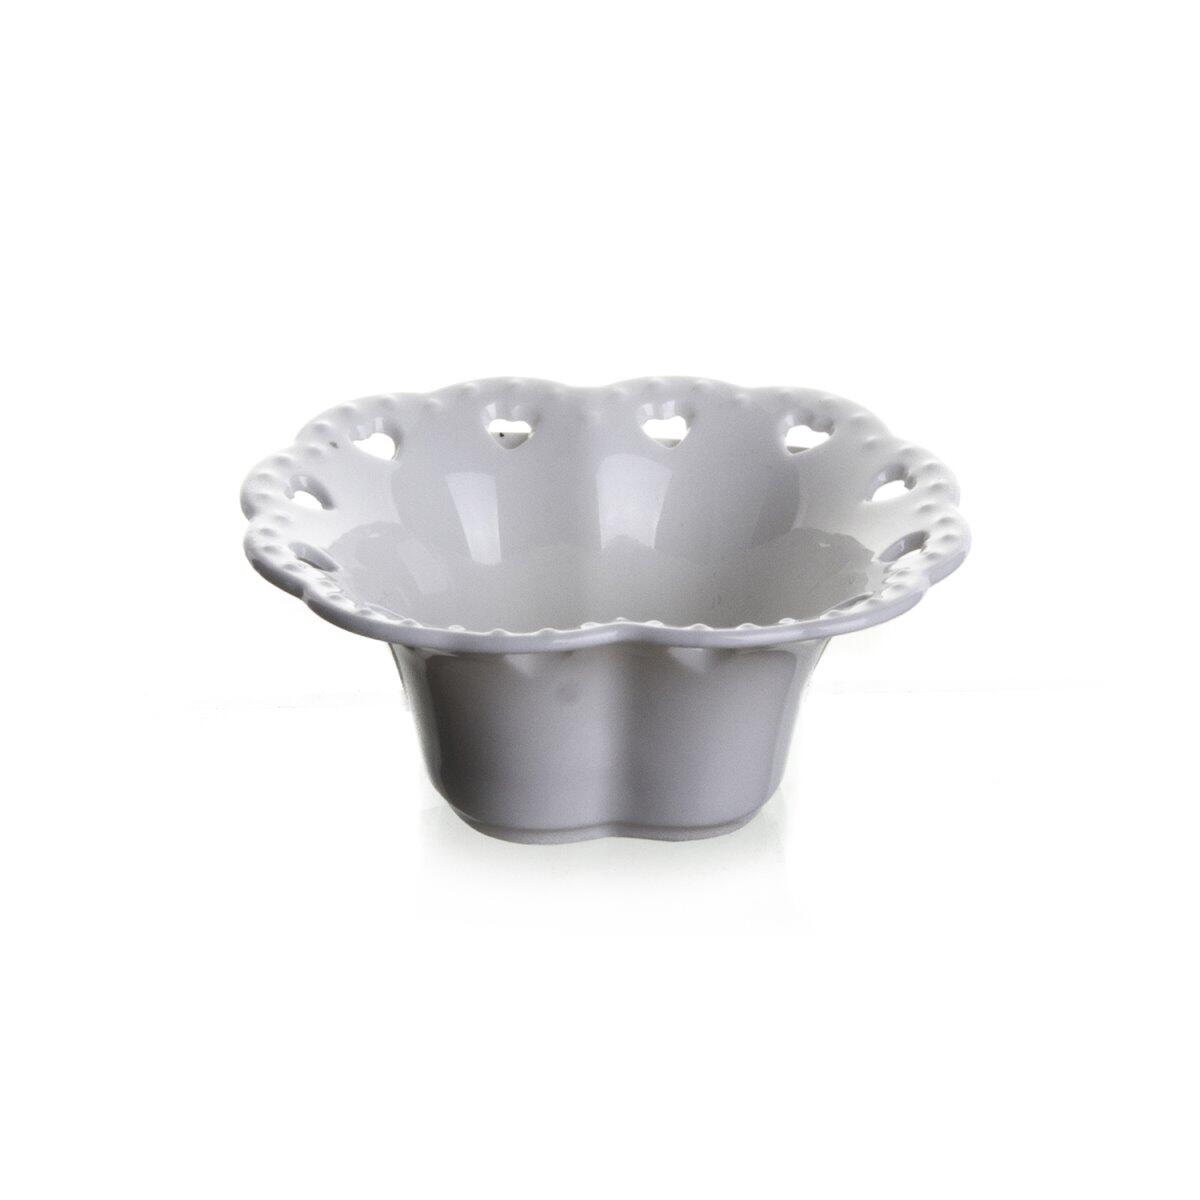 Ultraform Porcelain Perforated Bowl